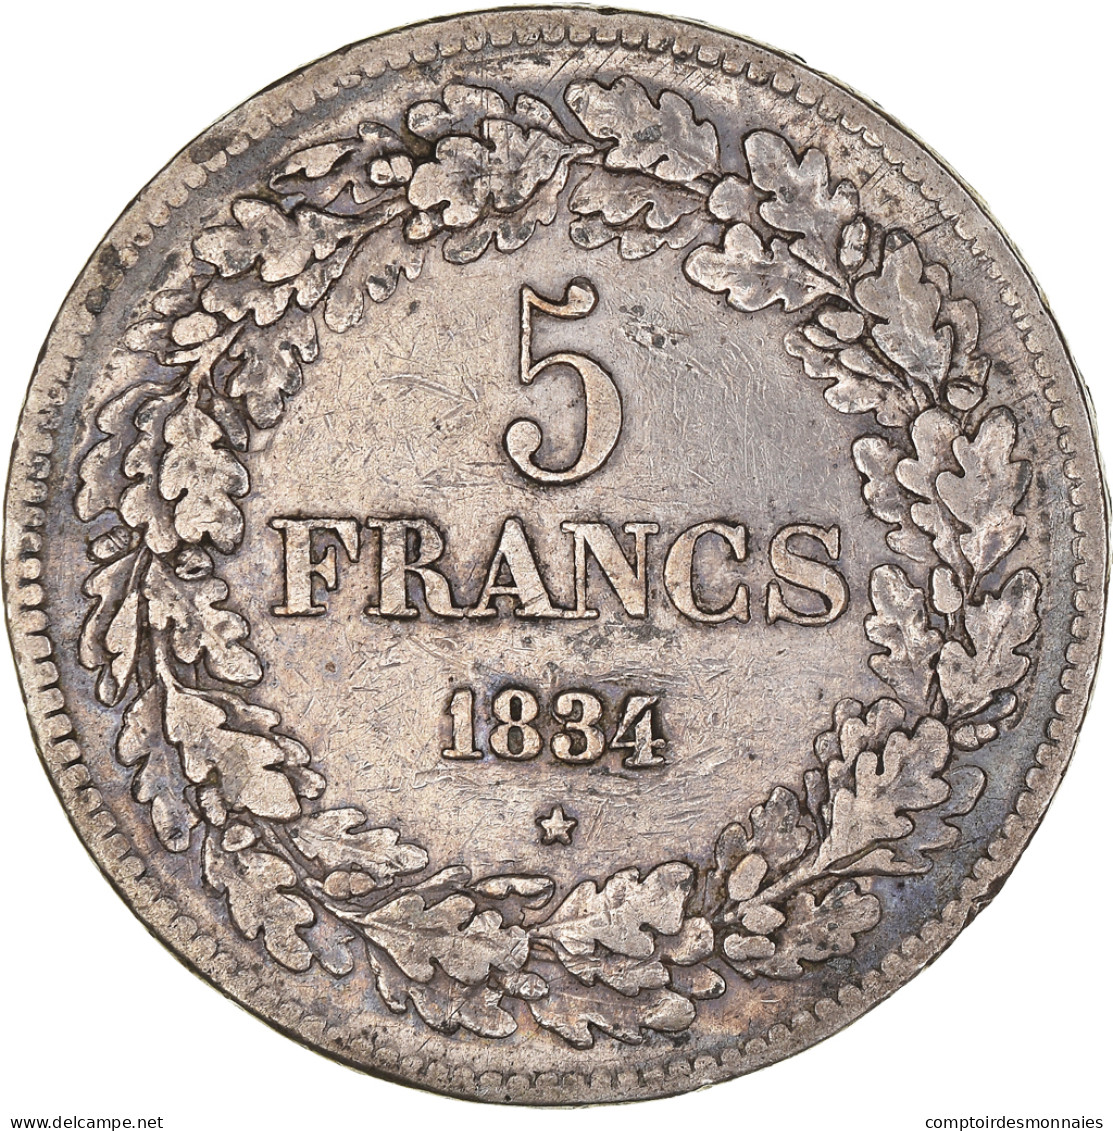 Monnaie, Belgique, Leopold I, 5 Francs, 5 Frank, 1834, Tranche B, TB+, Argent - 5 Francs